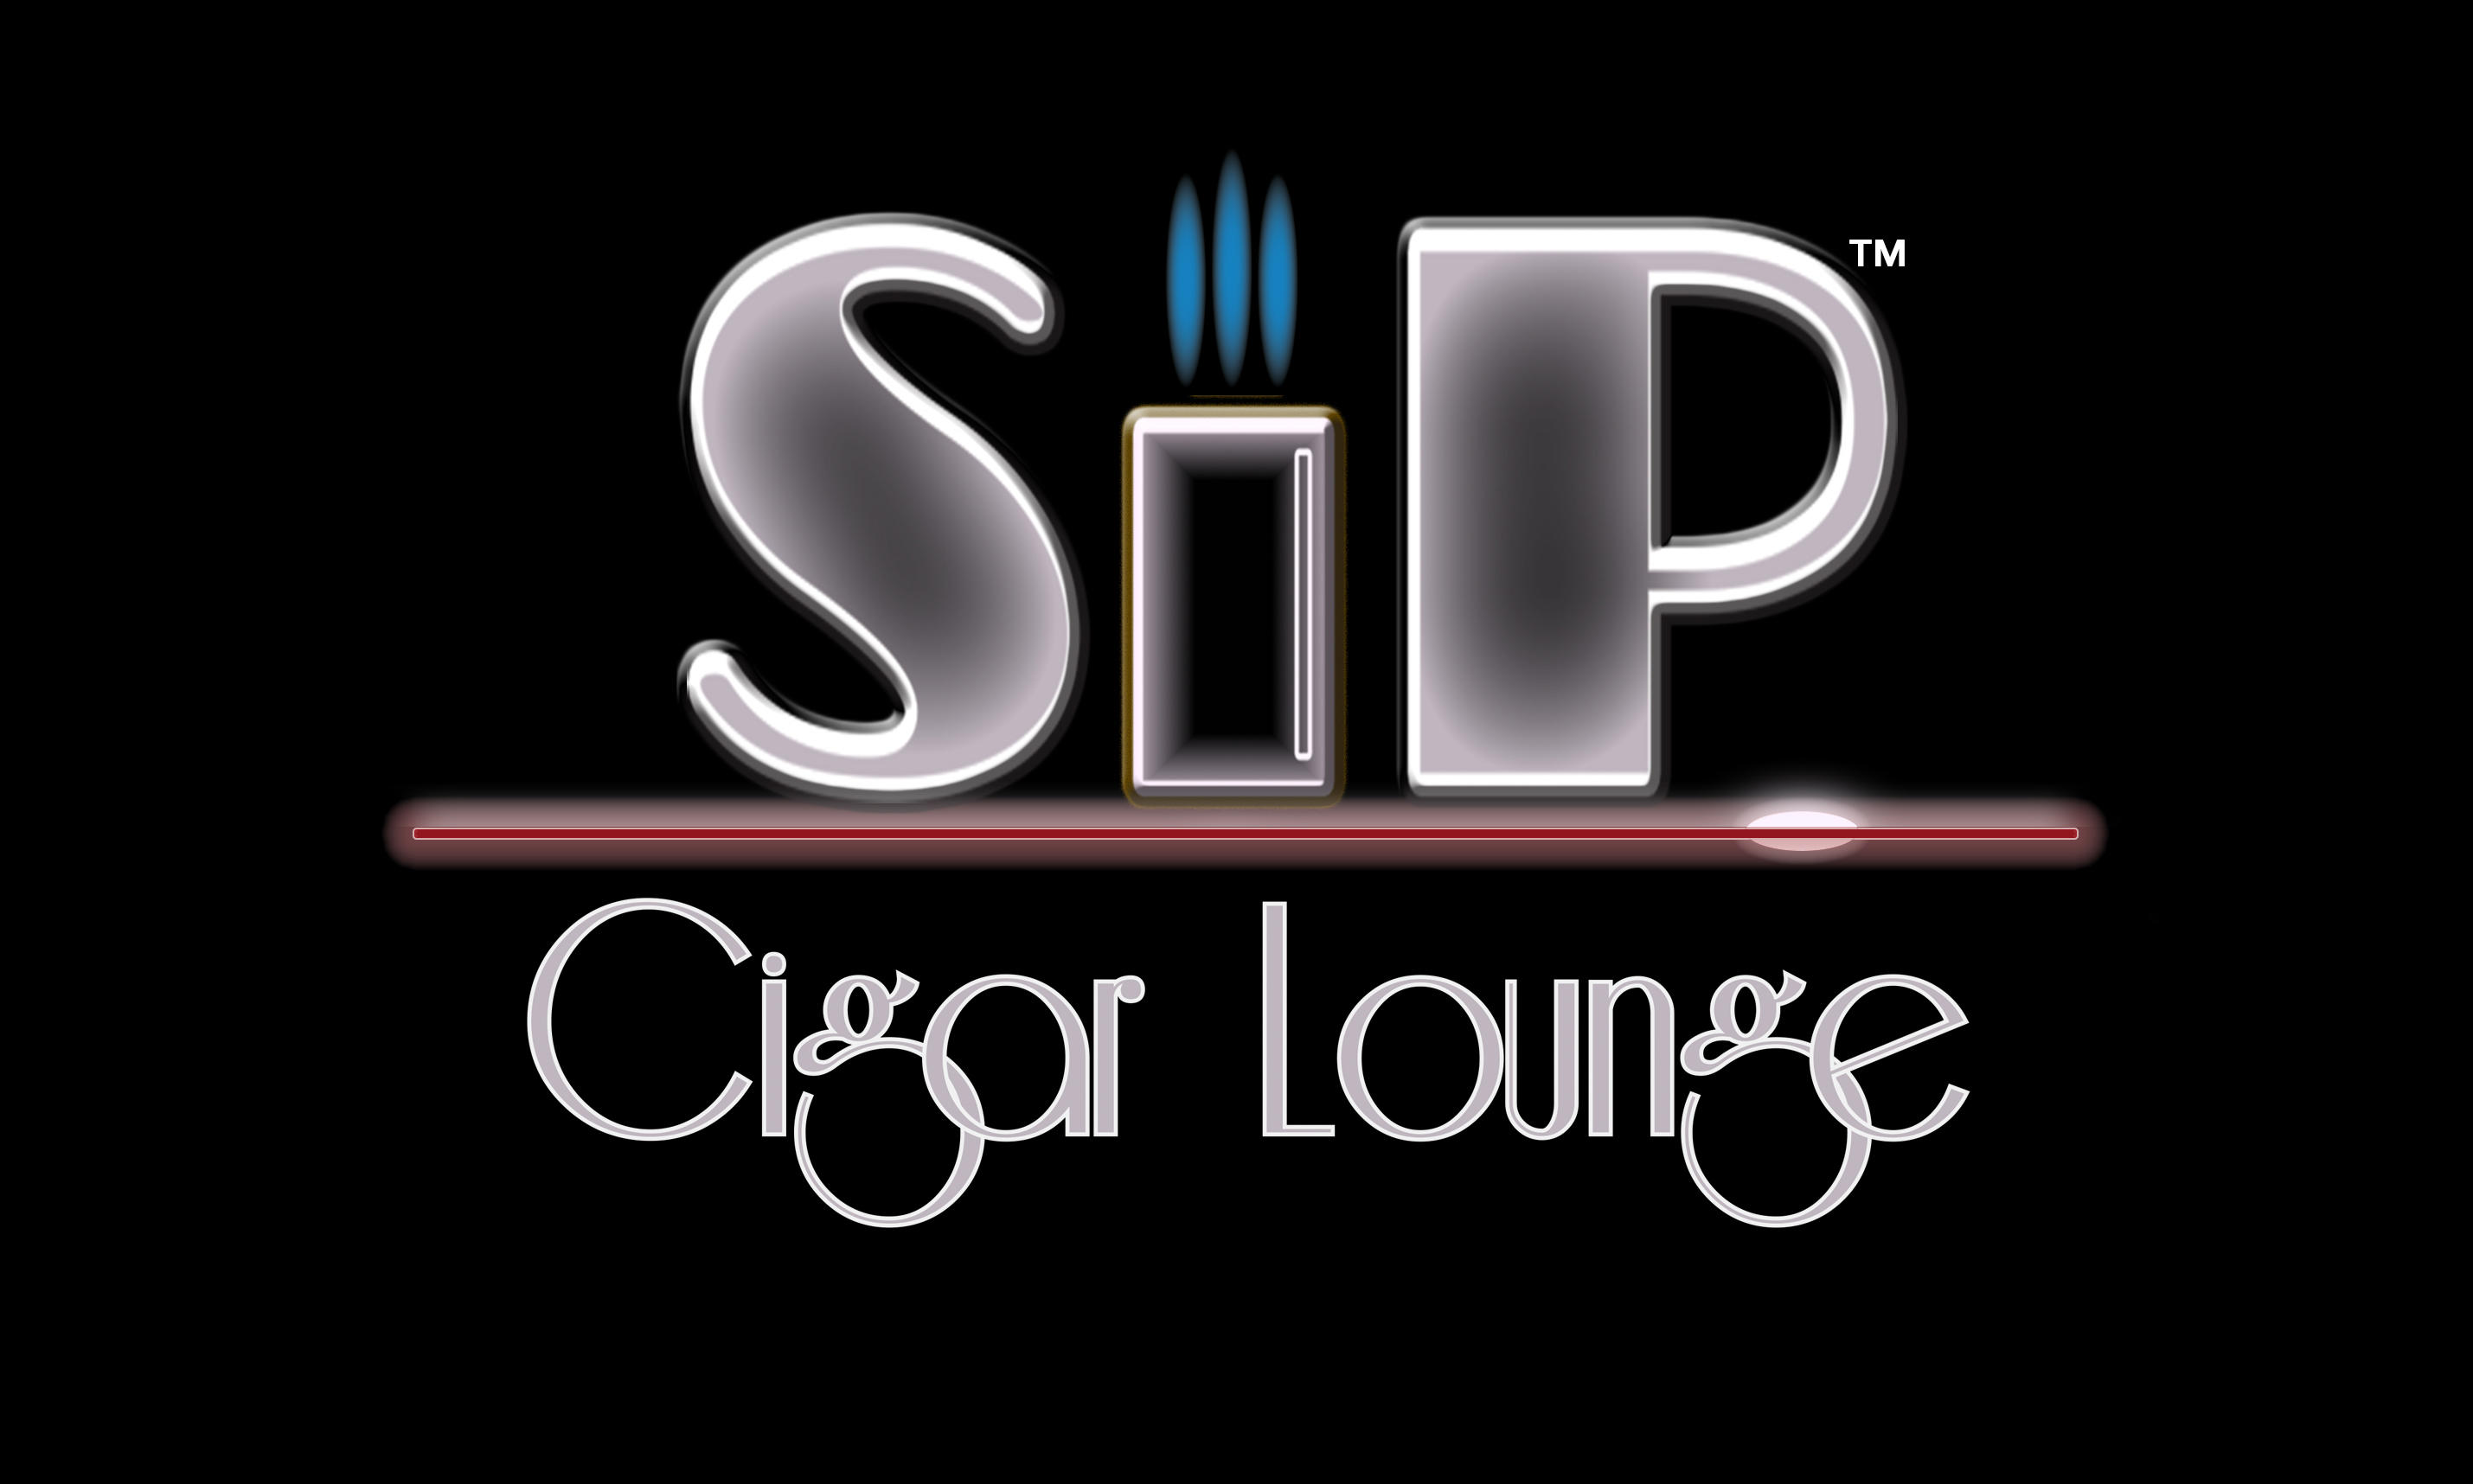 SiP Cigars & Lounge Photo